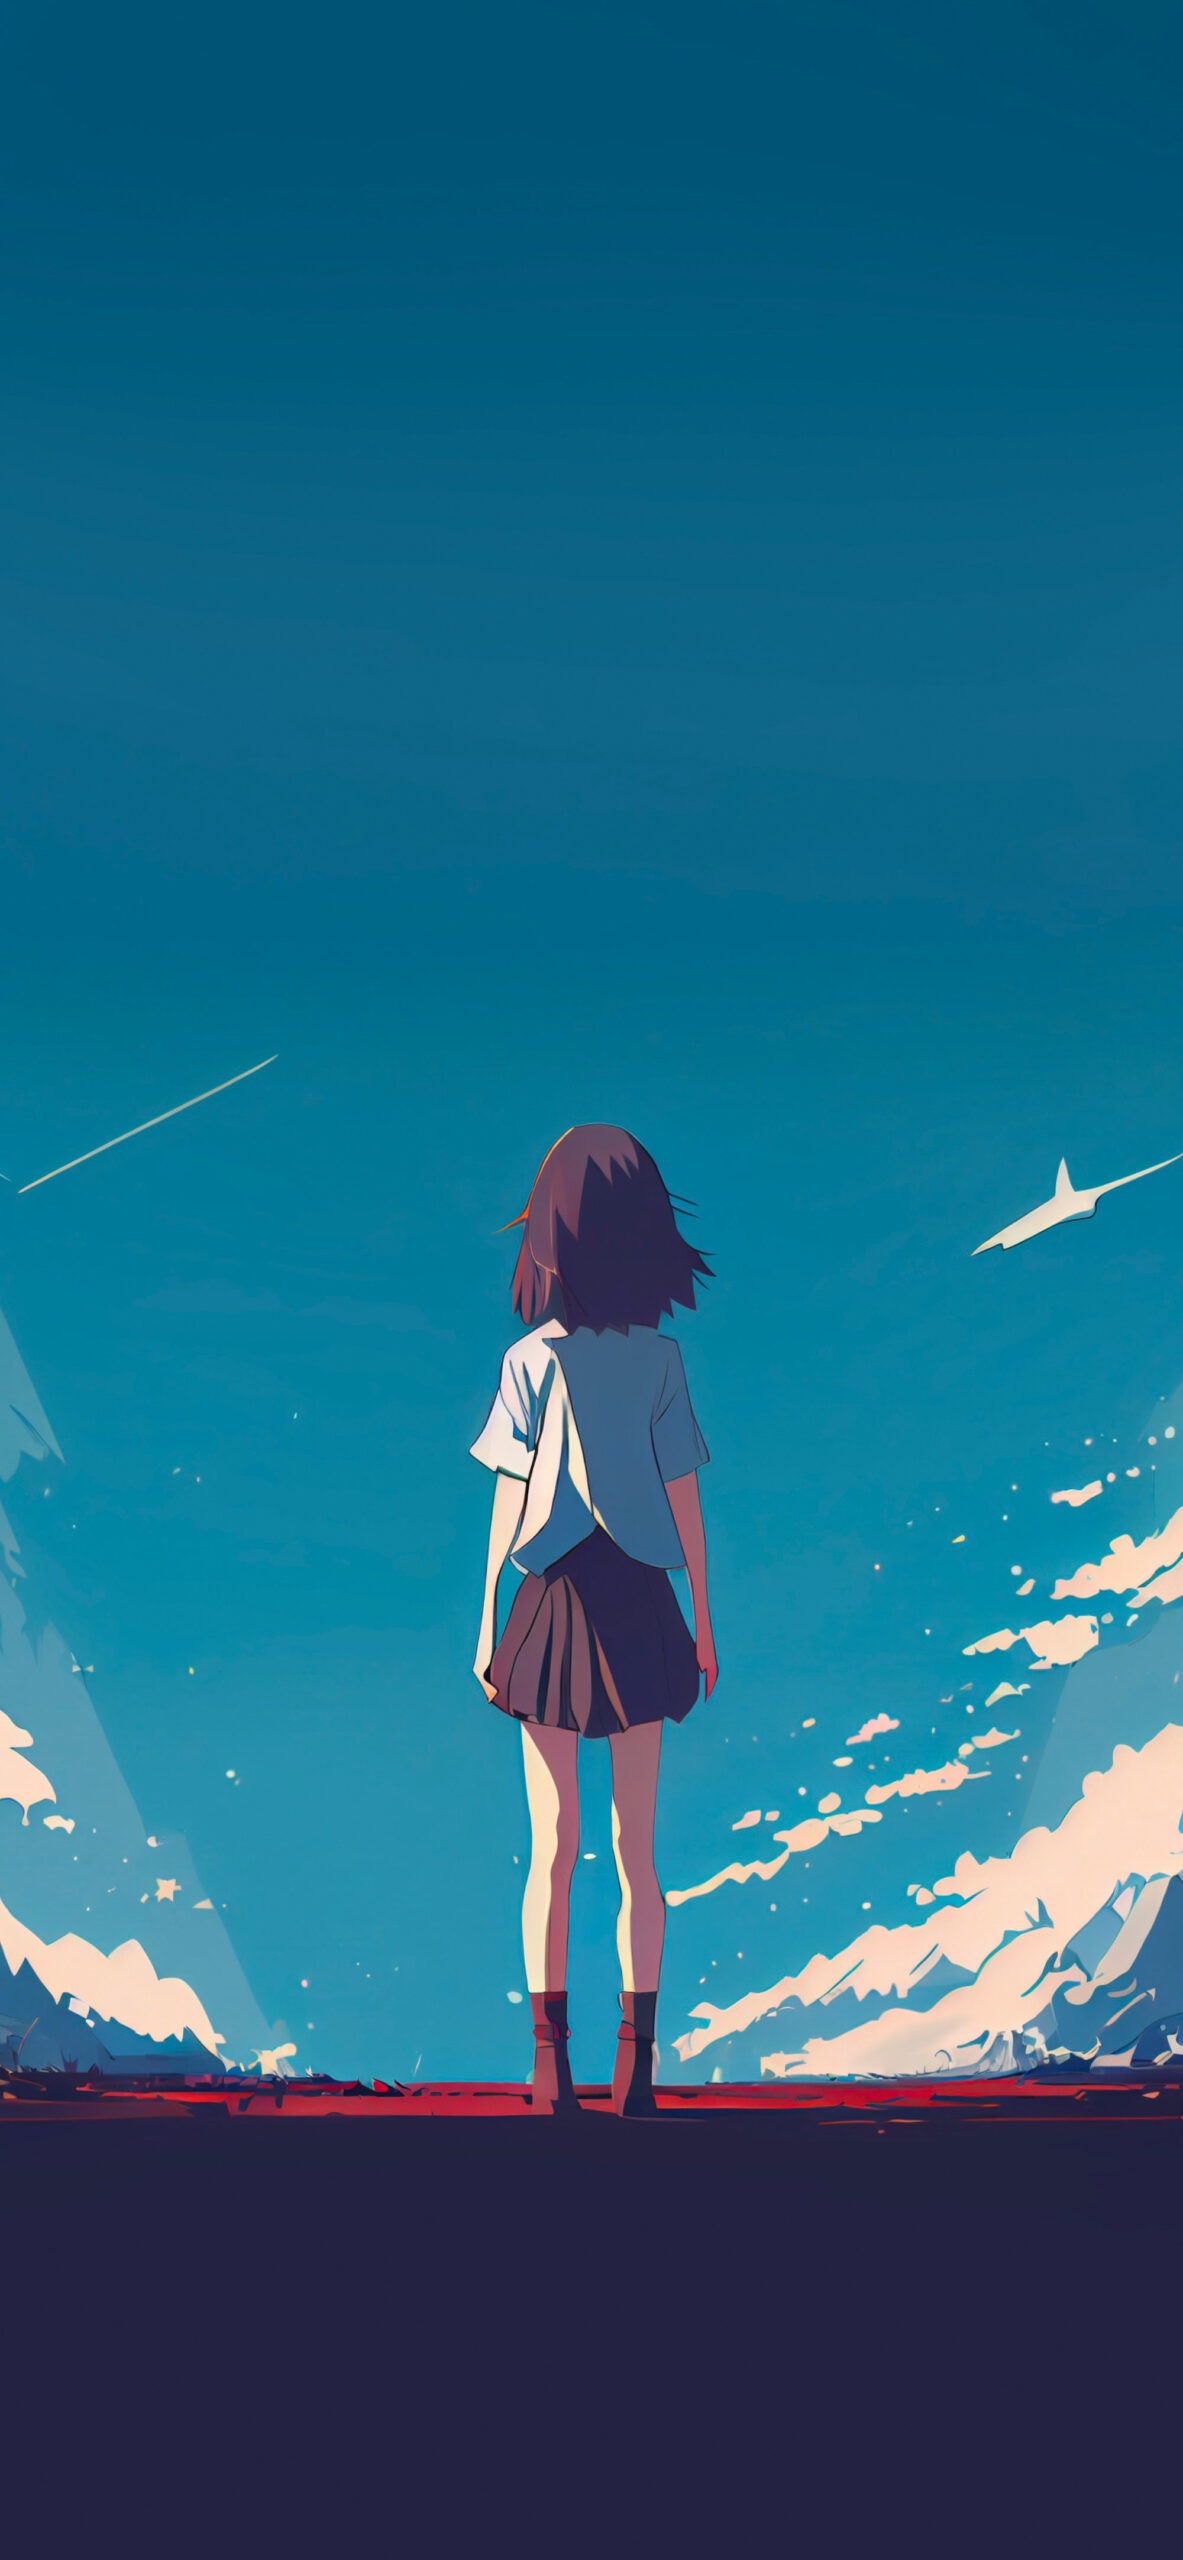 girl and sky anime aesthetic wallpaper